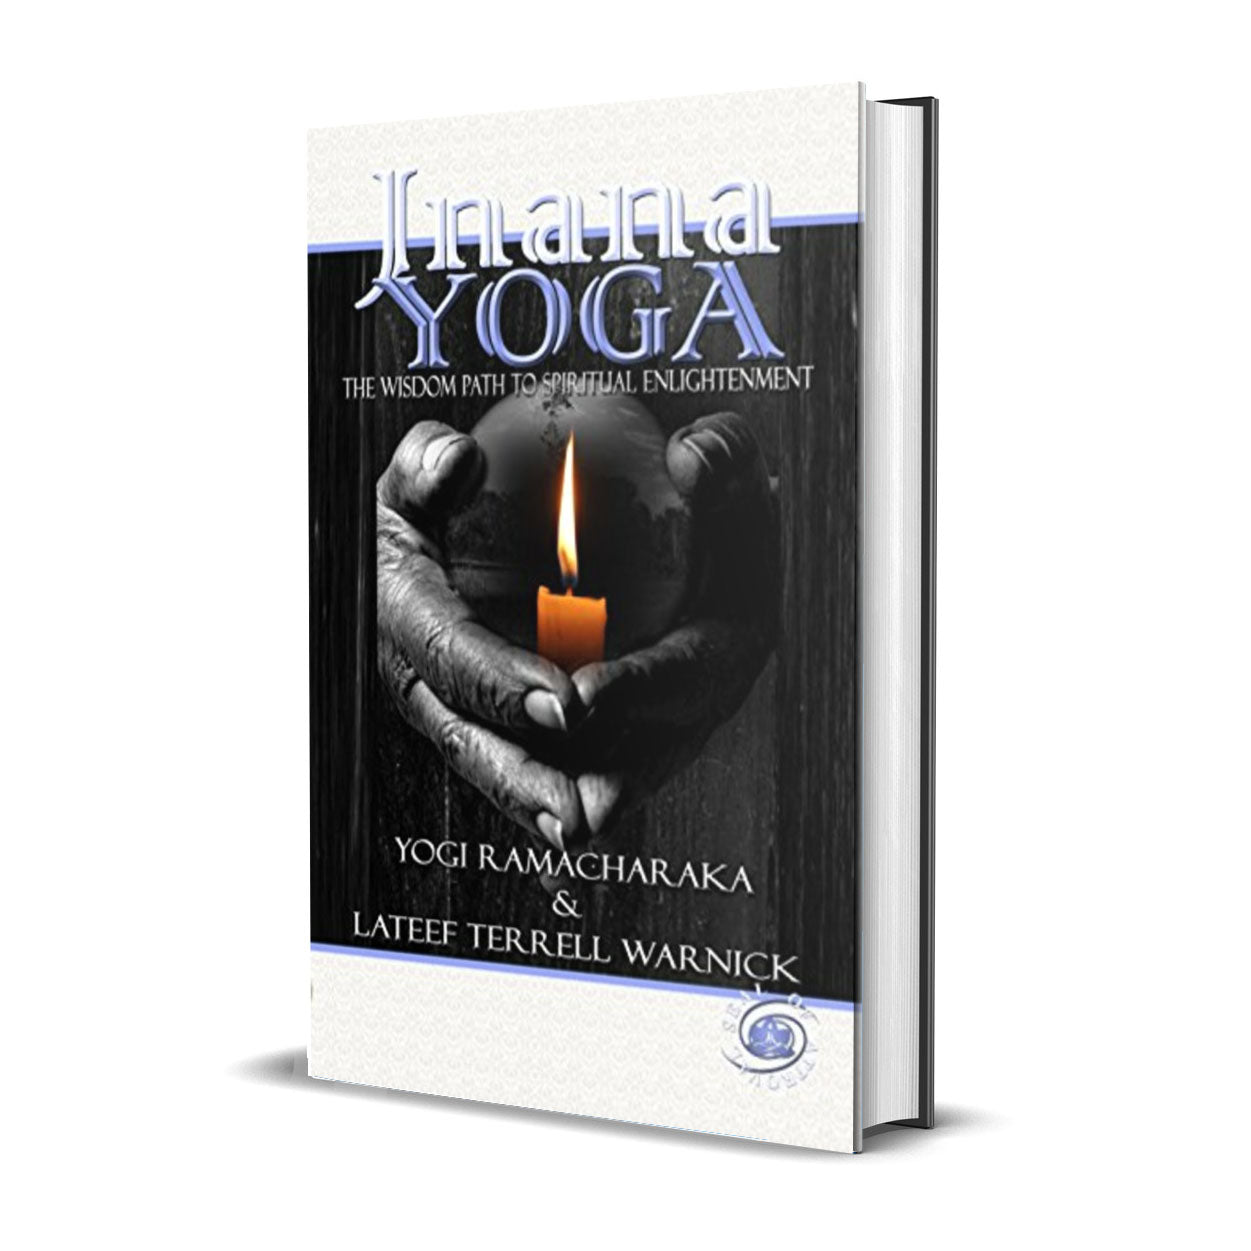 Jnana Yoga by Yogi Ramacharaka